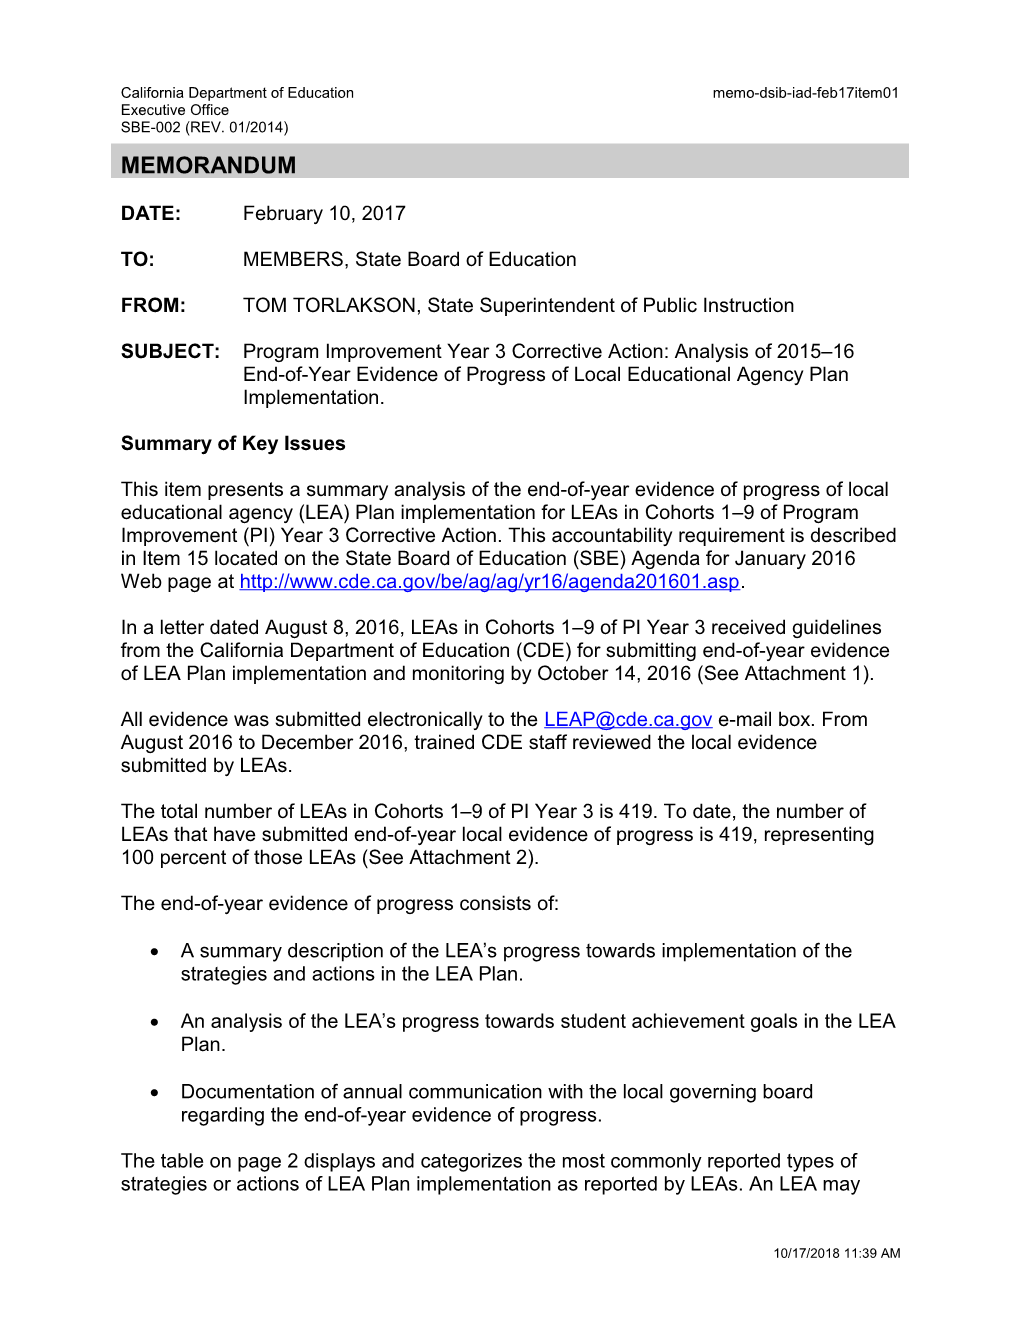 February 2017 Memorandum IAD Item 01 - Information Memorandum (CA State Board of Education)